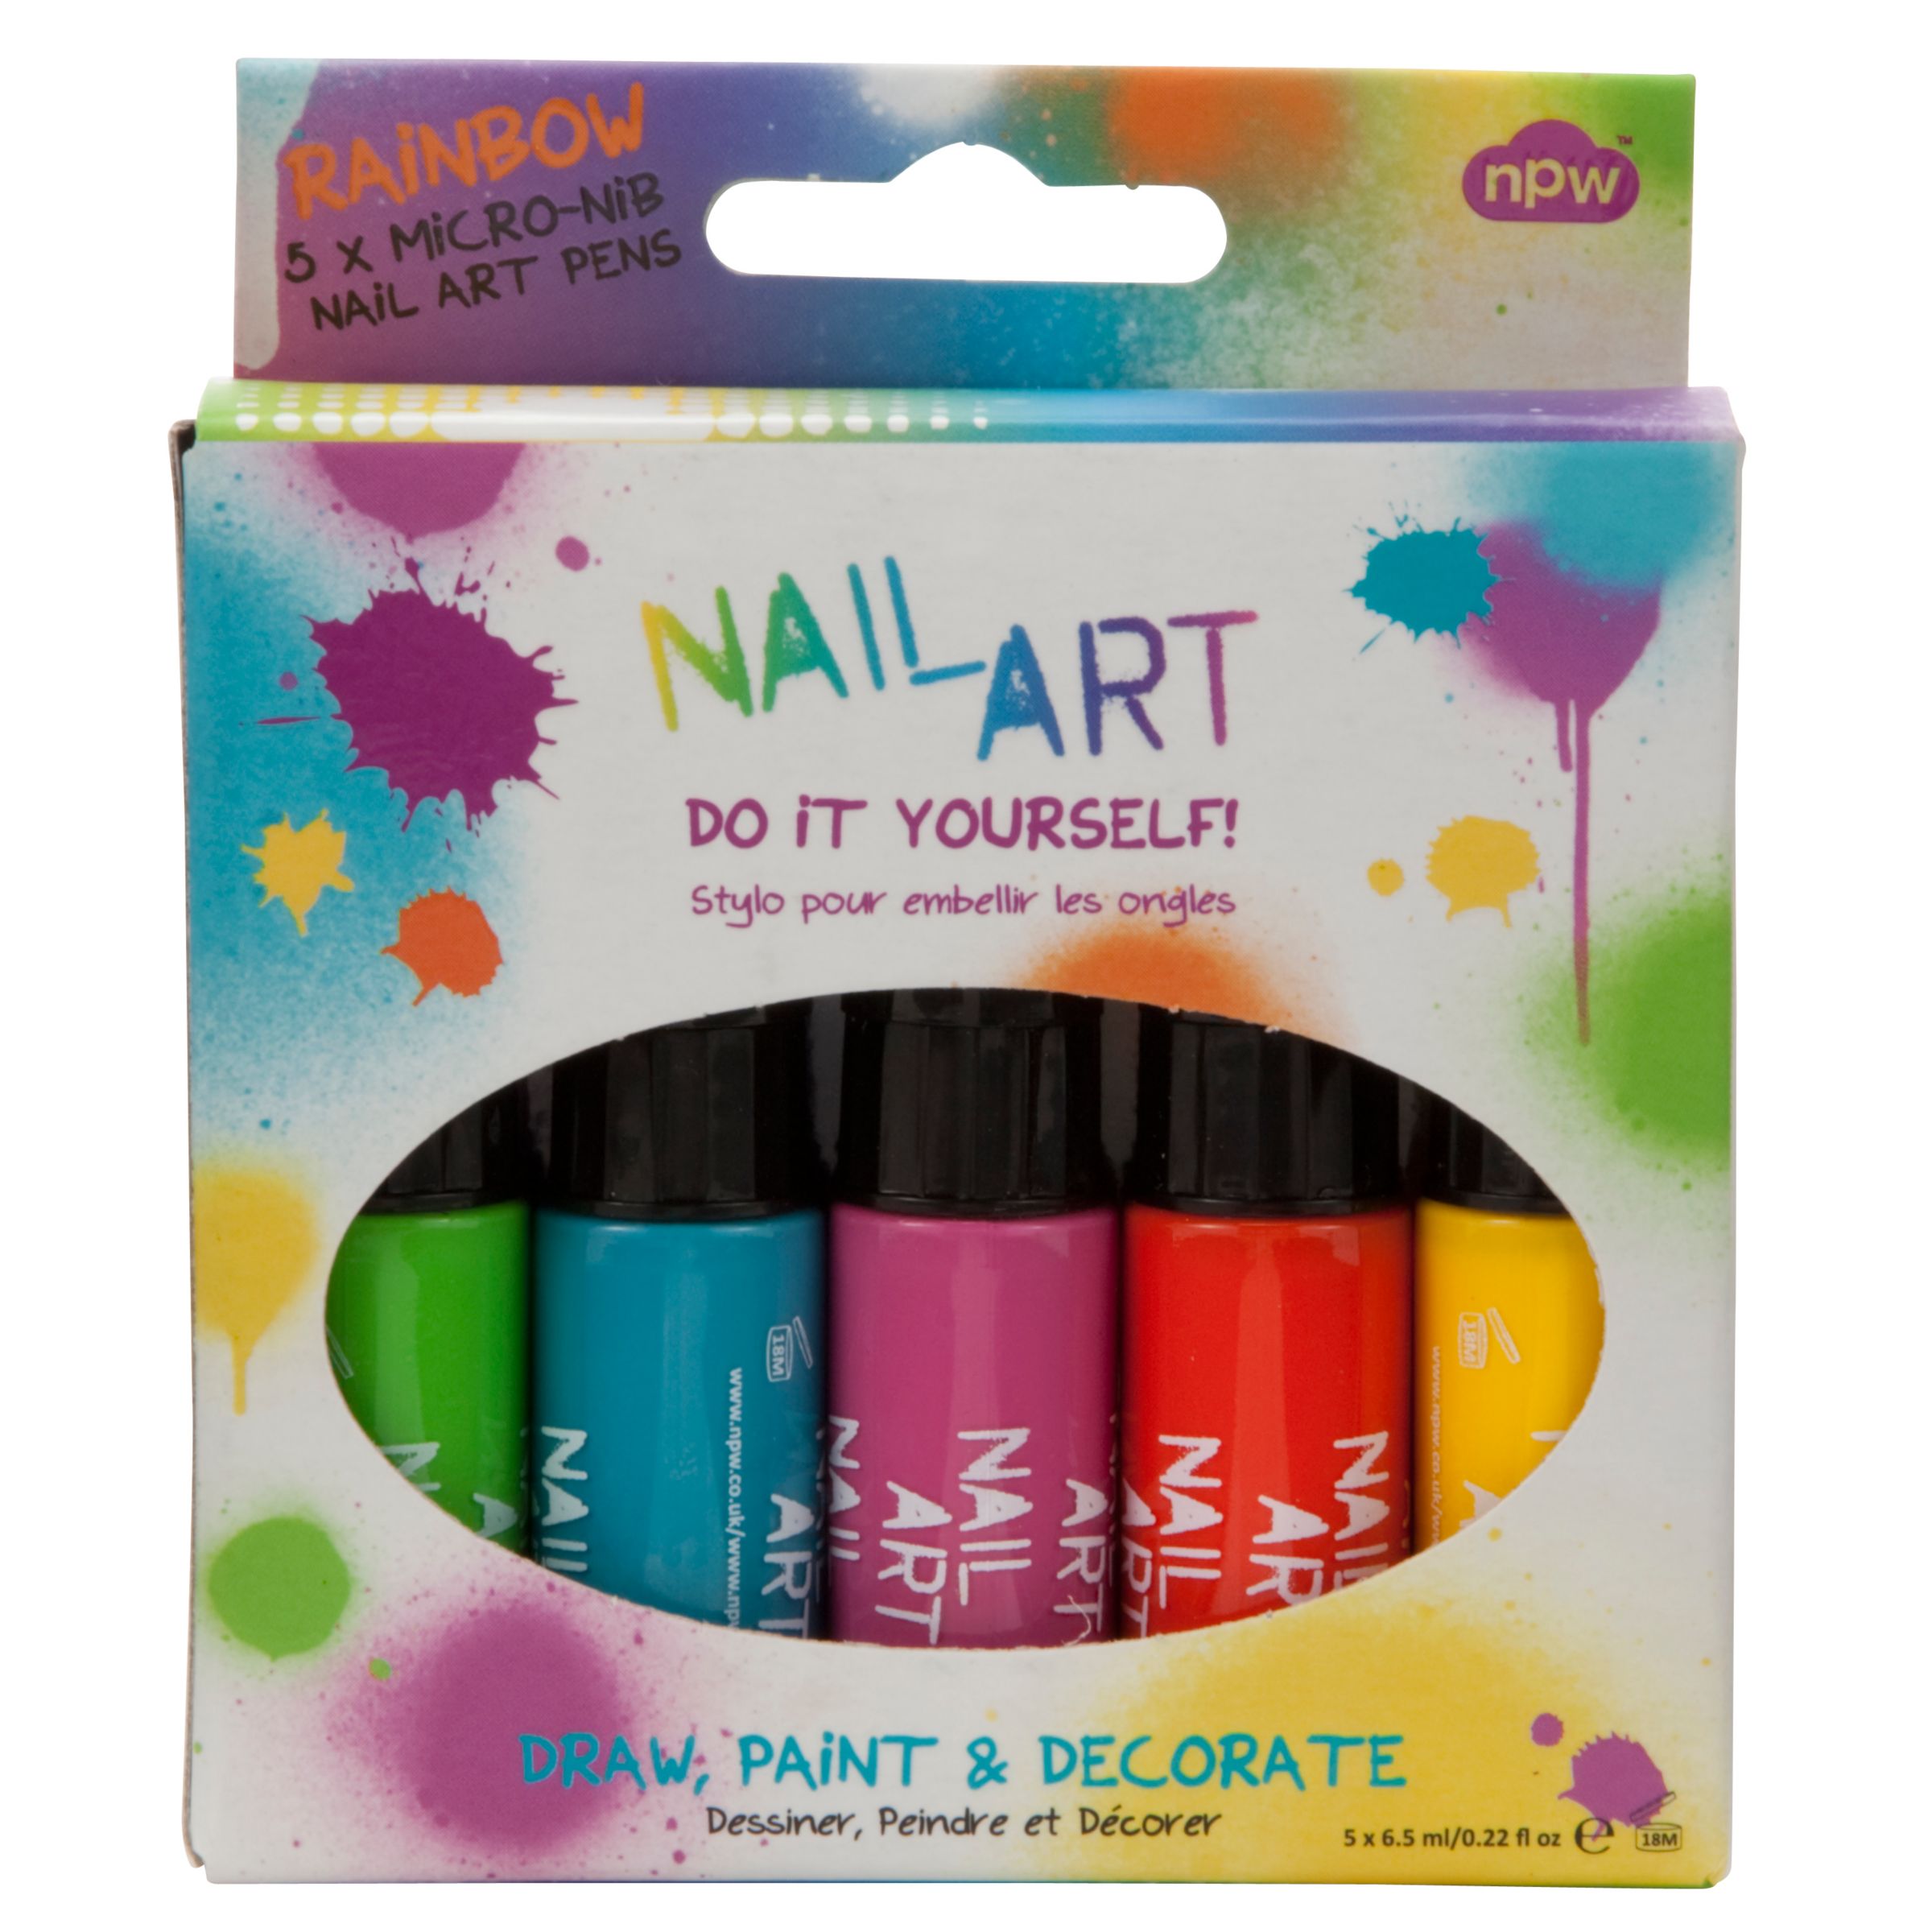 Nail Art Pens, Pack of 5, Multi